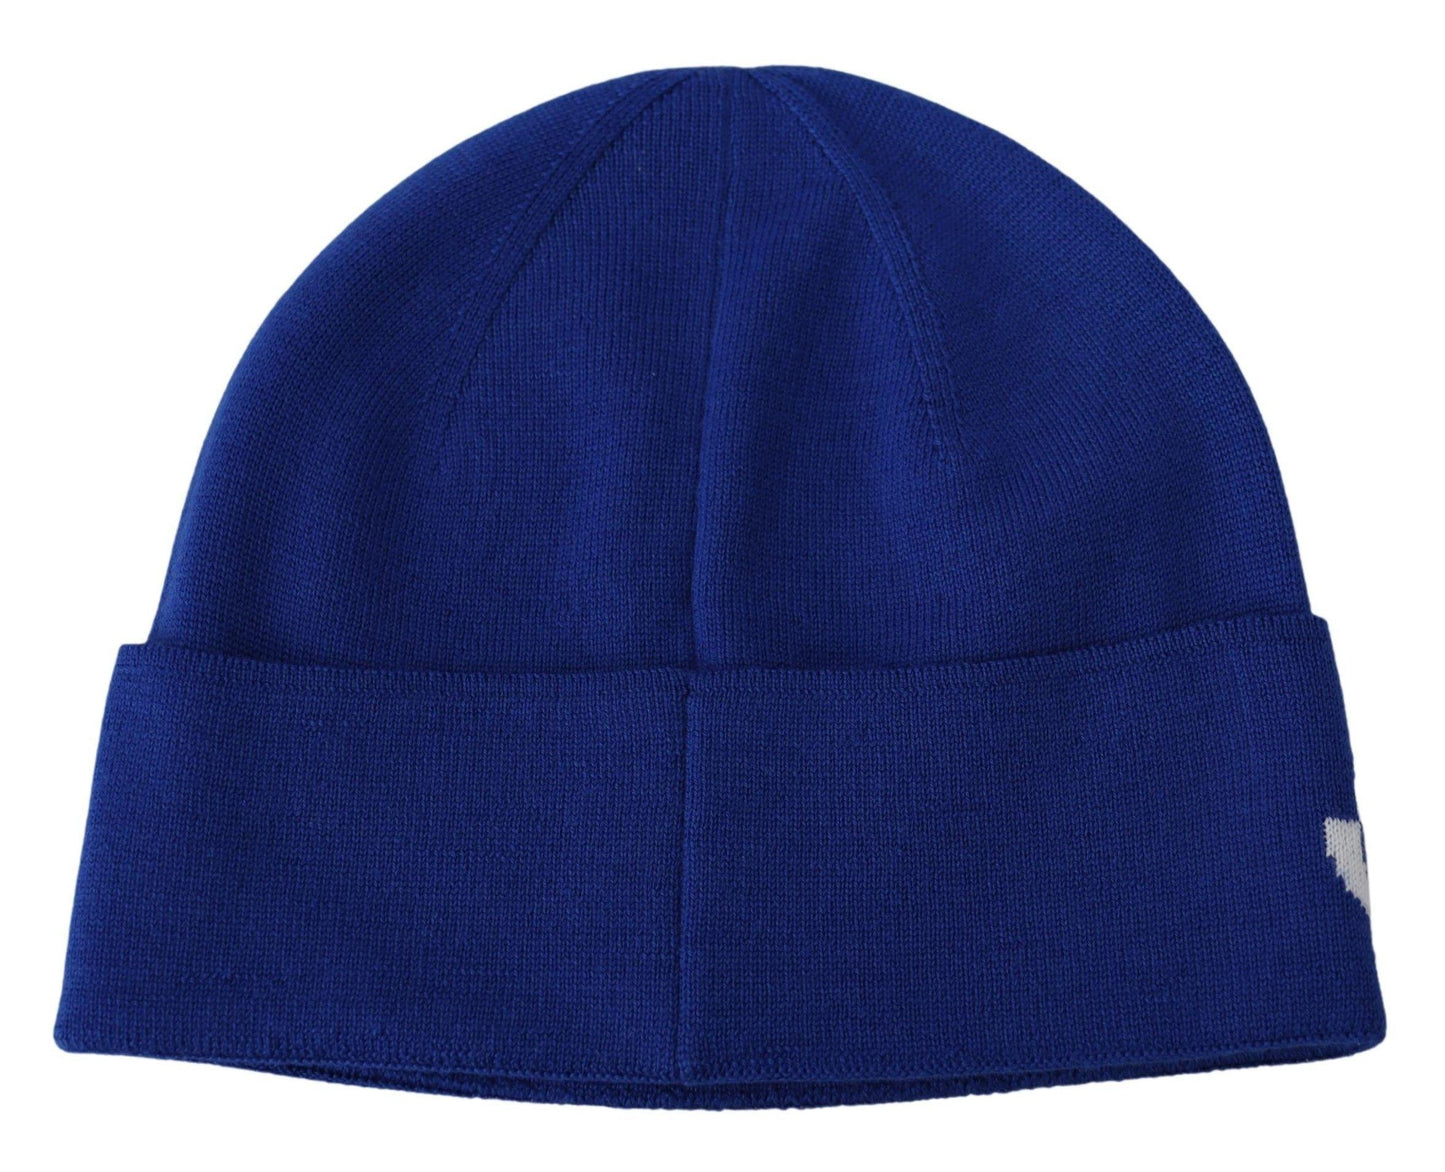 Givenchy Men's Blue Wool Unisex Winter Warm Beanie Hat